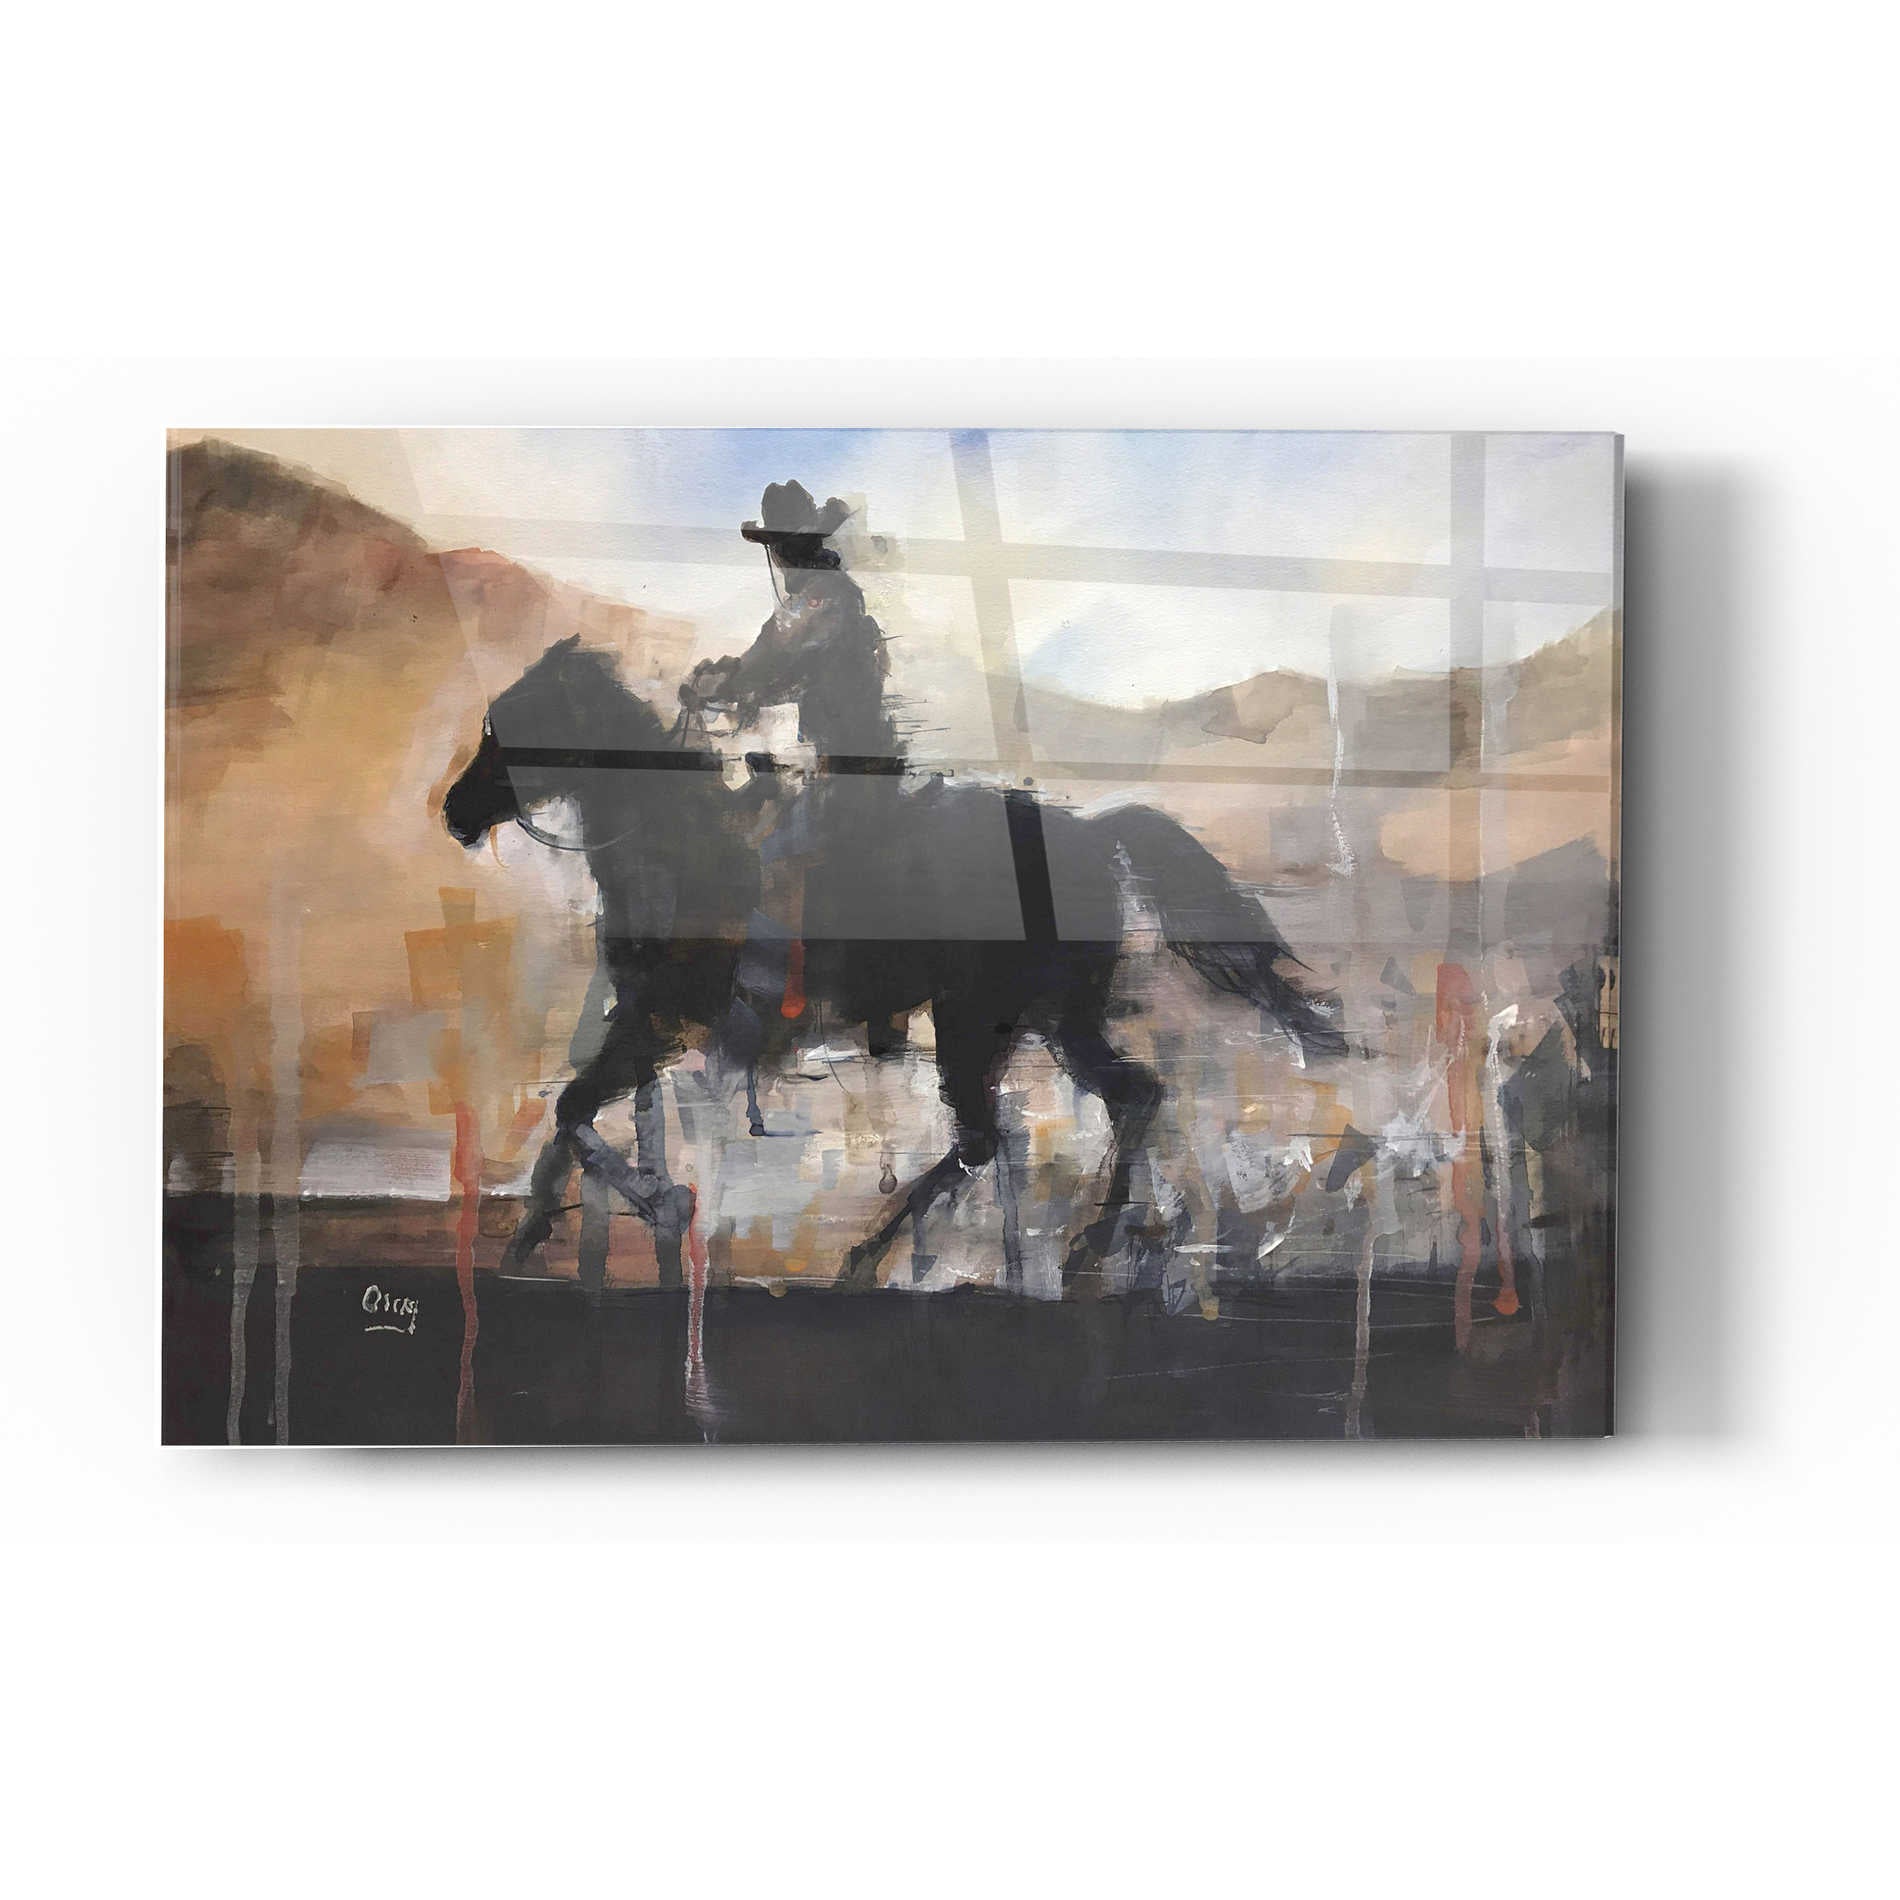 Epic Art 'The Chase' by Oscar Alvarez Pardo, Acrylic Glass Wall Art,24x36